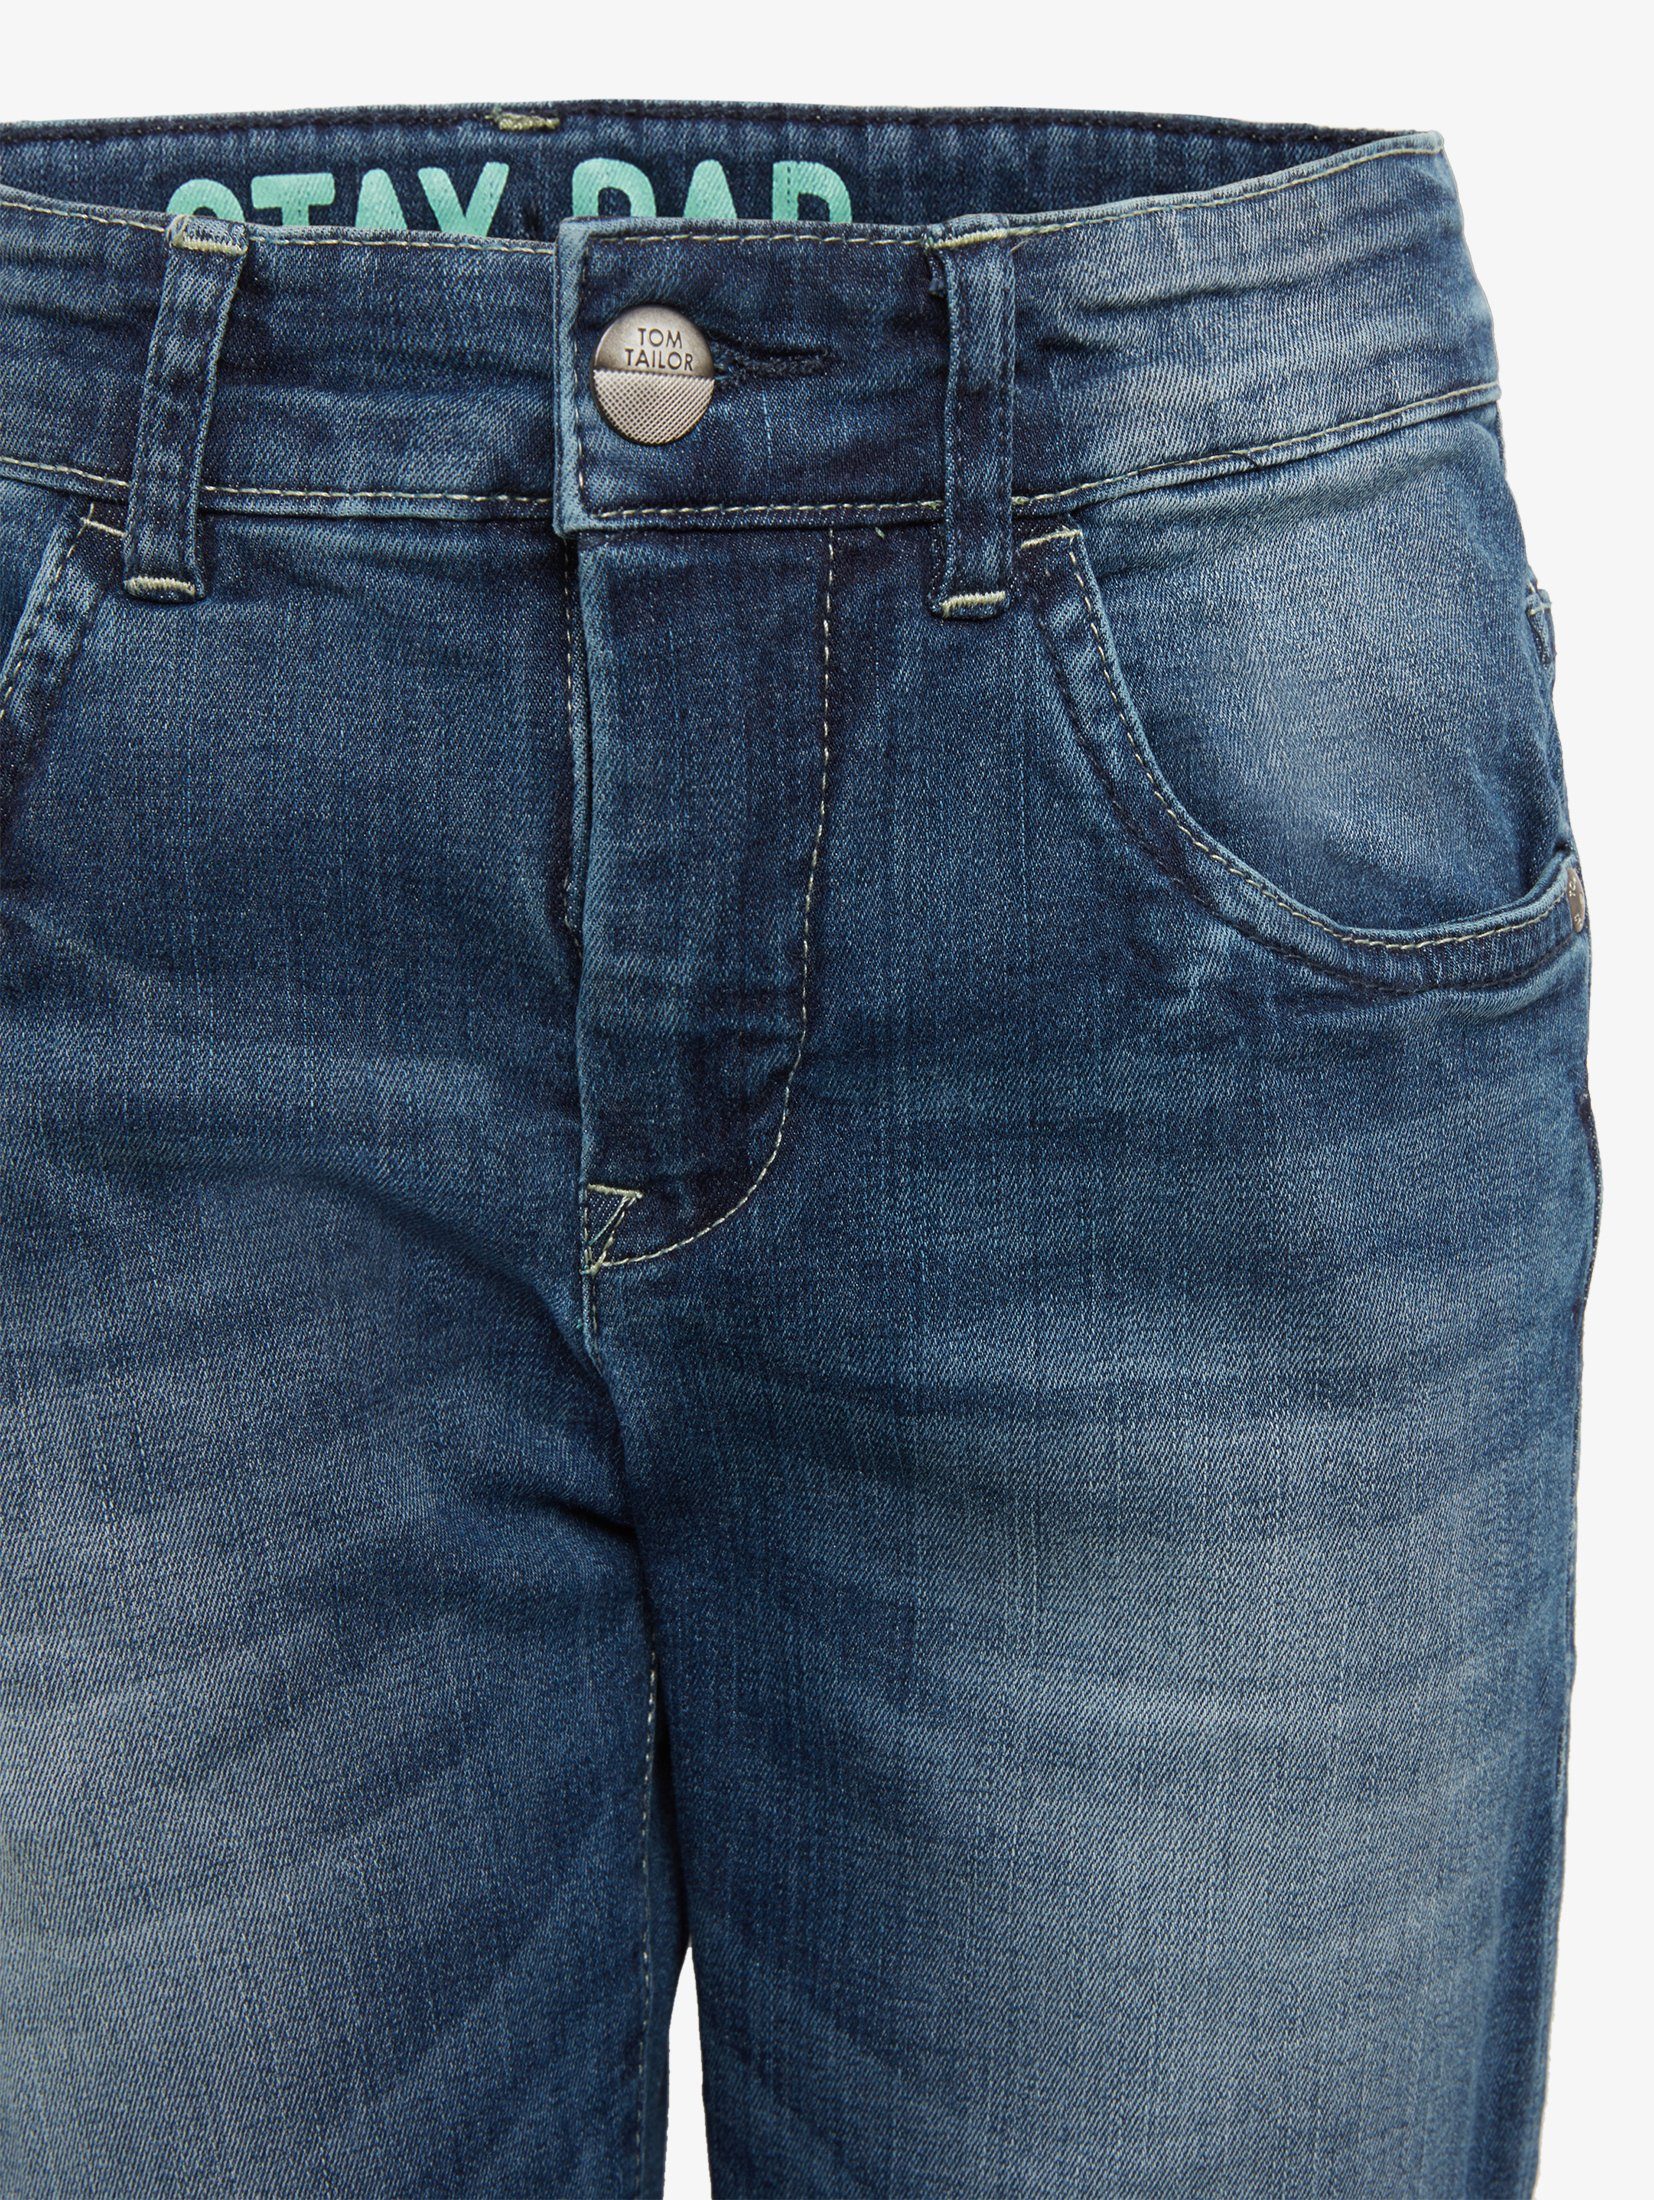 TOM TAILOR Gerade Jeans »Ryan Jeans« online kaufen | OTTO